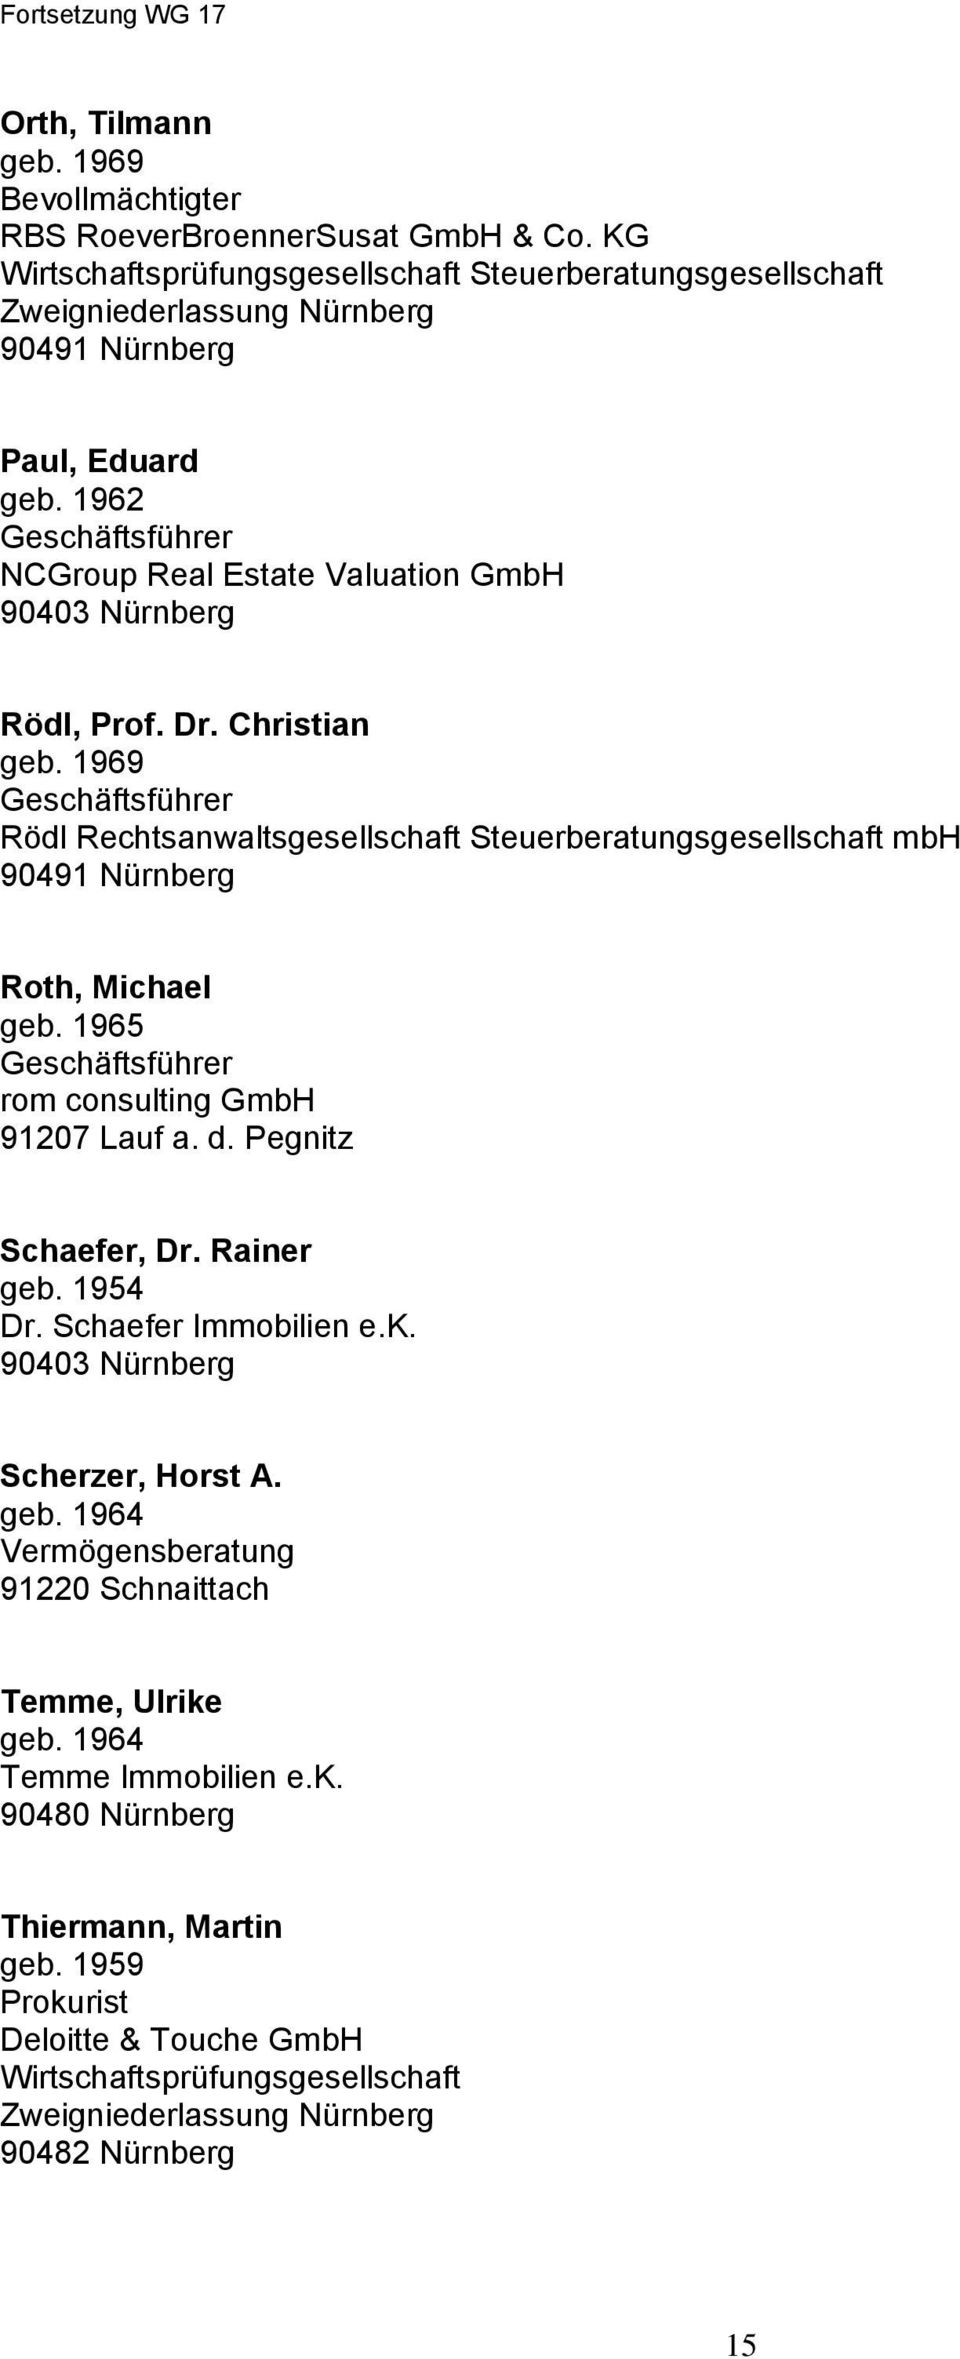 Christian geb. 1969 Rödl Rechtsanwaltsgesellschaft Steuerberatungsgesellschaft mbh 90491 Nürnberg Roth, Michael geb. 1965 rom consulting GmbH 91207 Lauf a. d. Pegnitz Schaefer, Dr. Rainer geb.